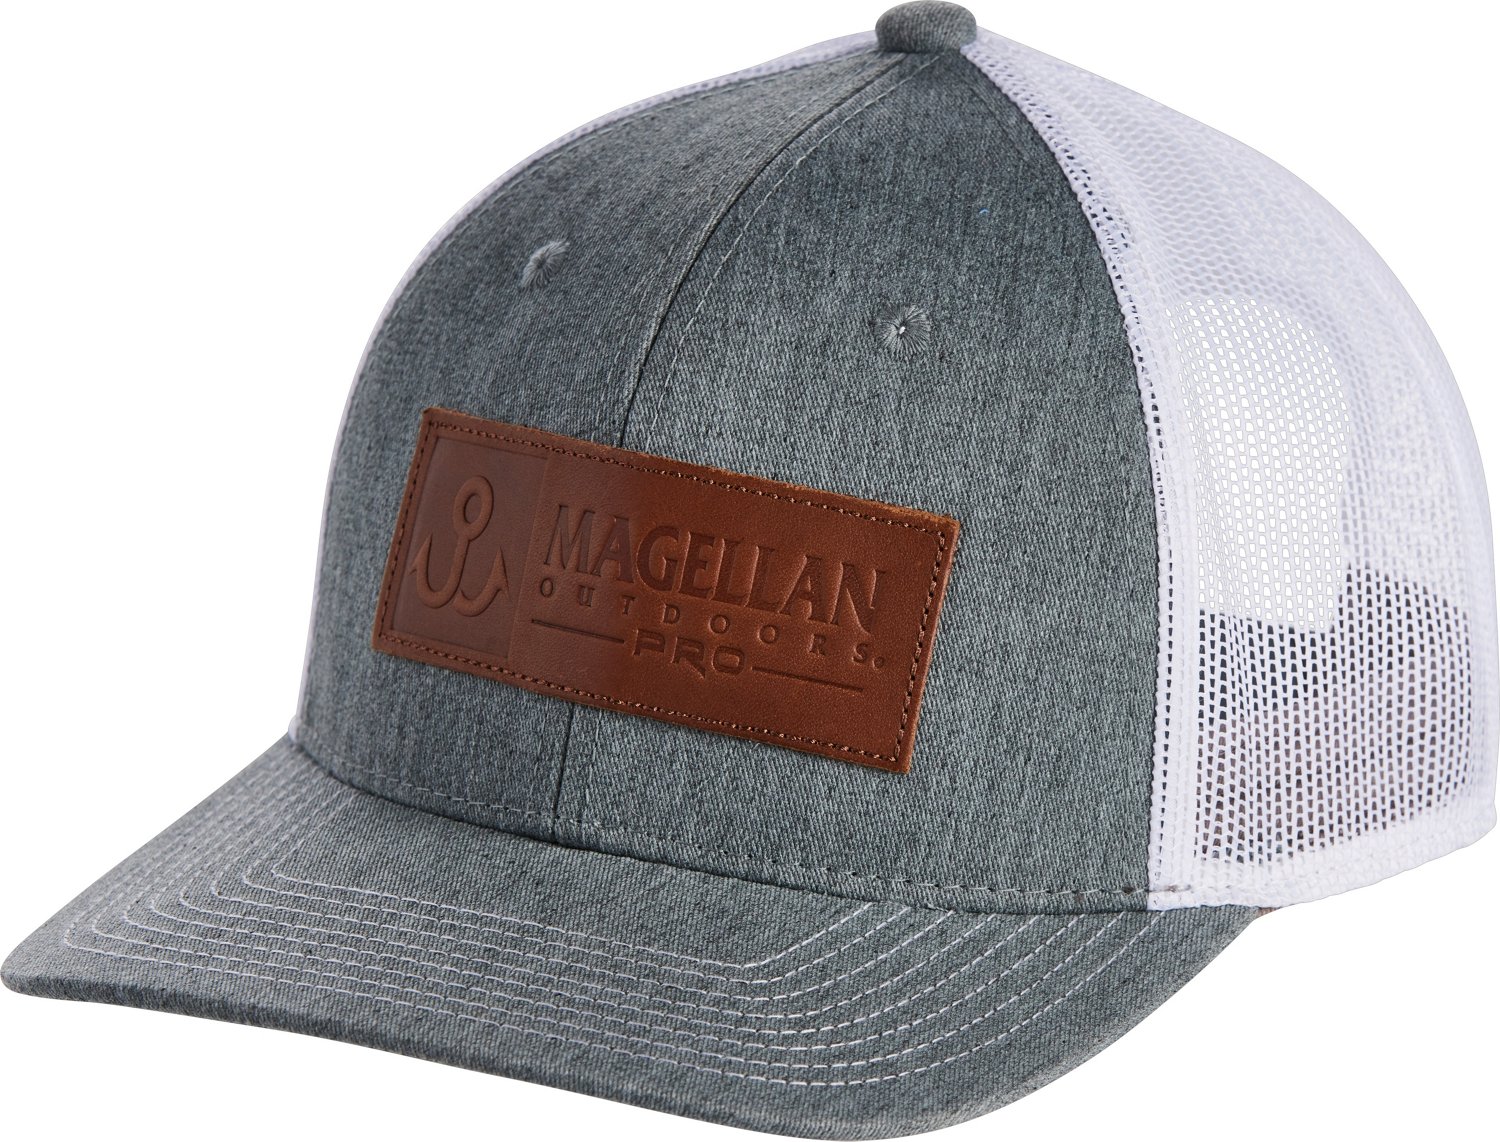 Magellan Outdoors Fishing Blue Gray Mesh Back Adult Adjustable Snapback Hat  Cap